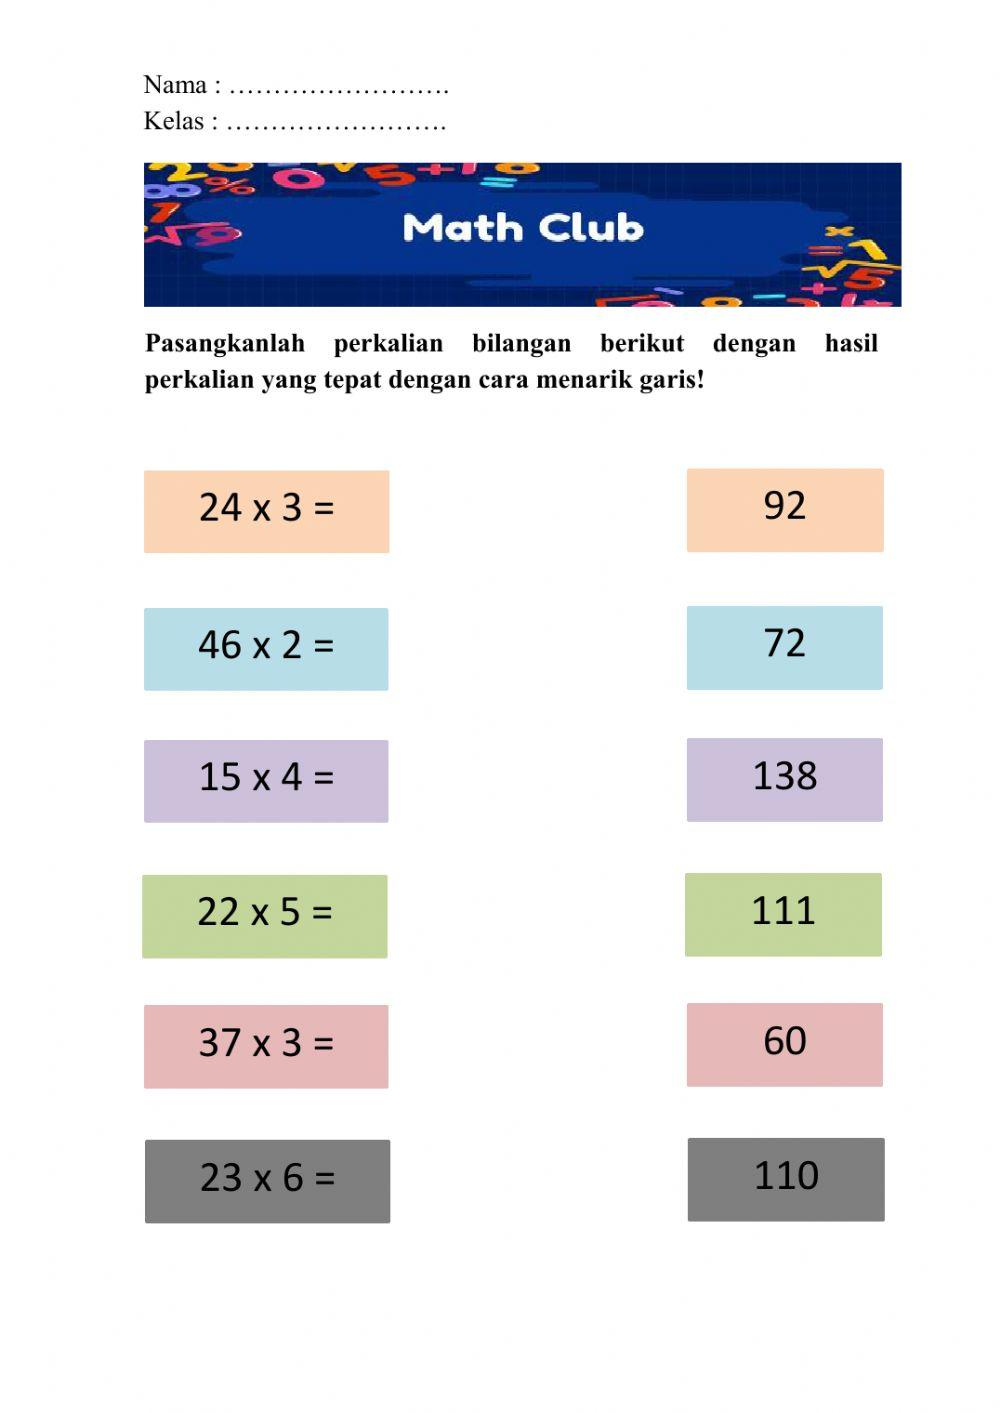 Math Club Exercise Perkalian 10 Des